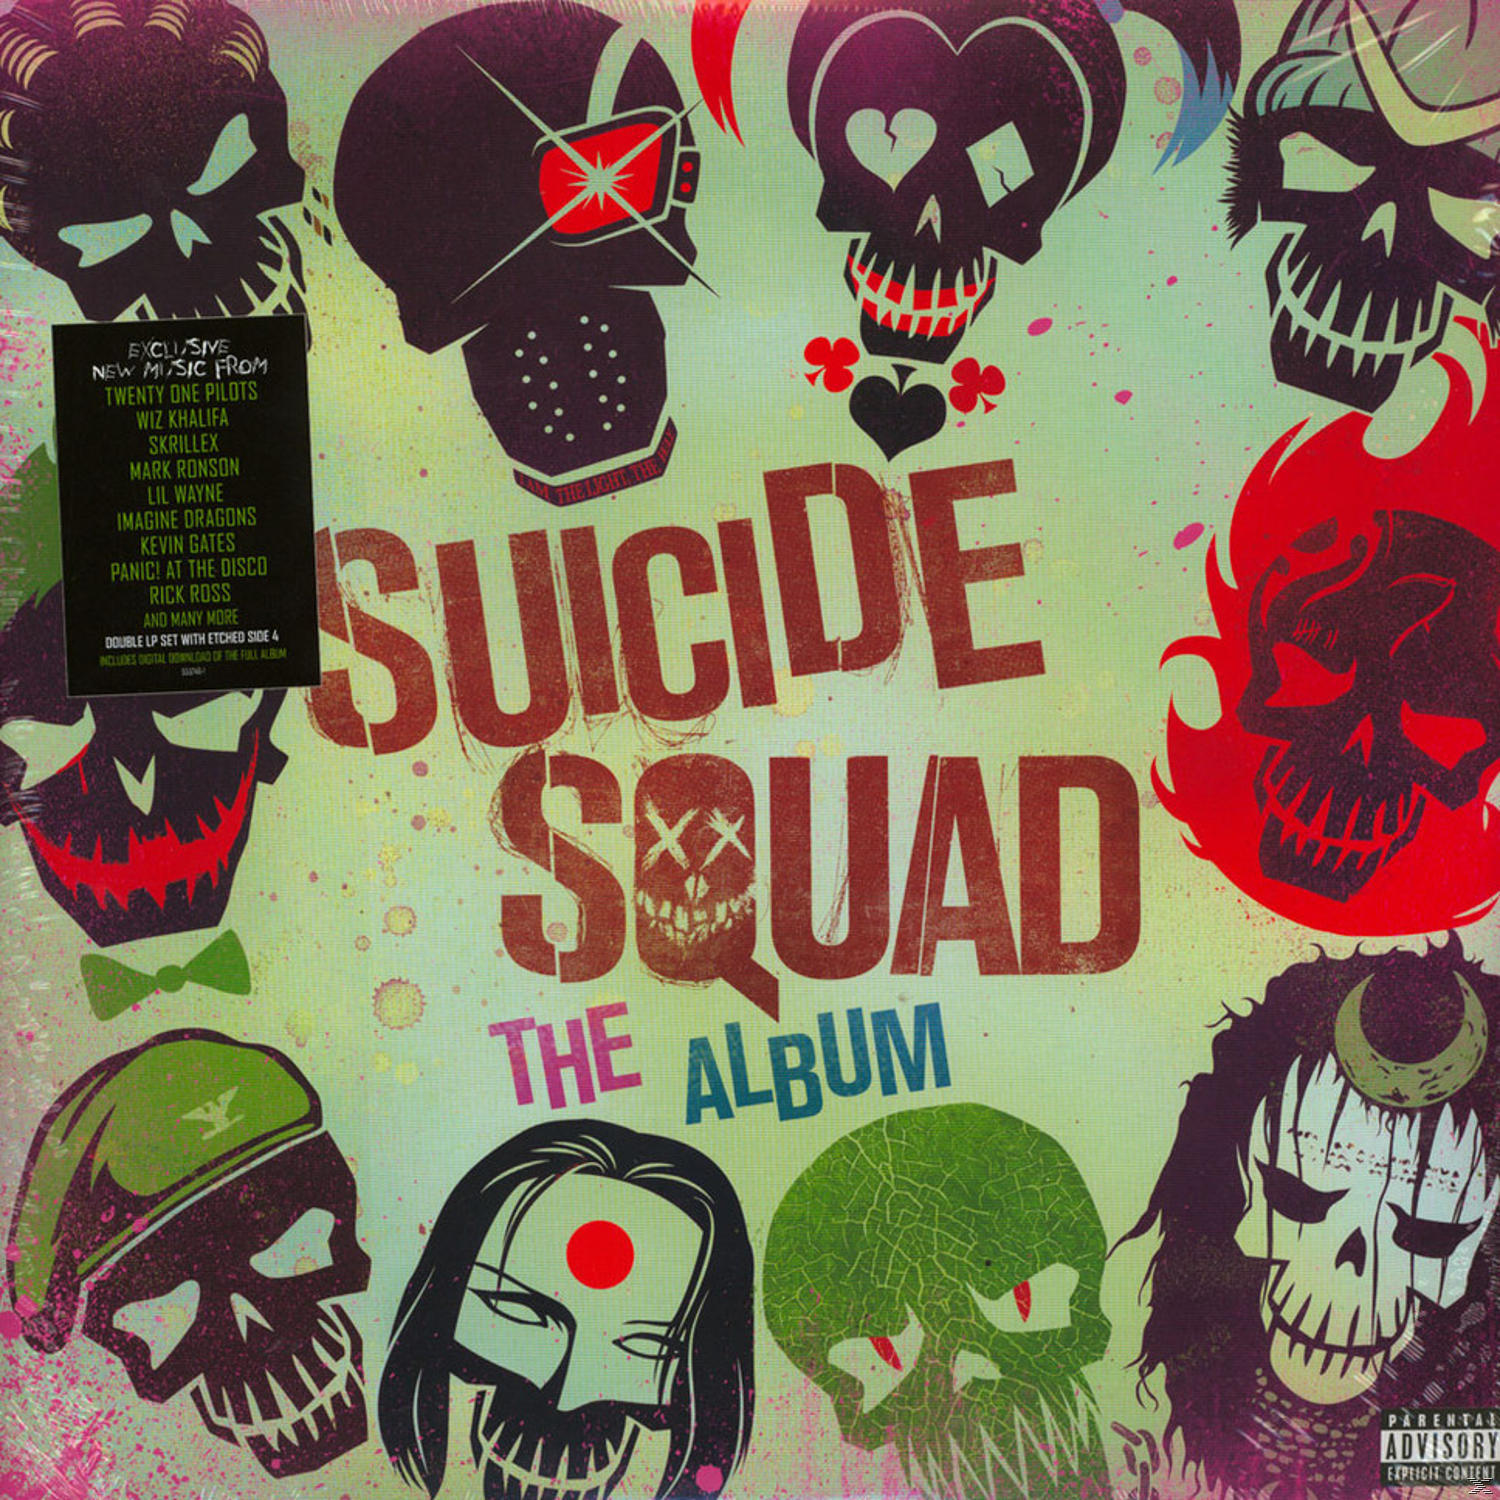 VARIOUS - (Vinyl) Squad - Suicide